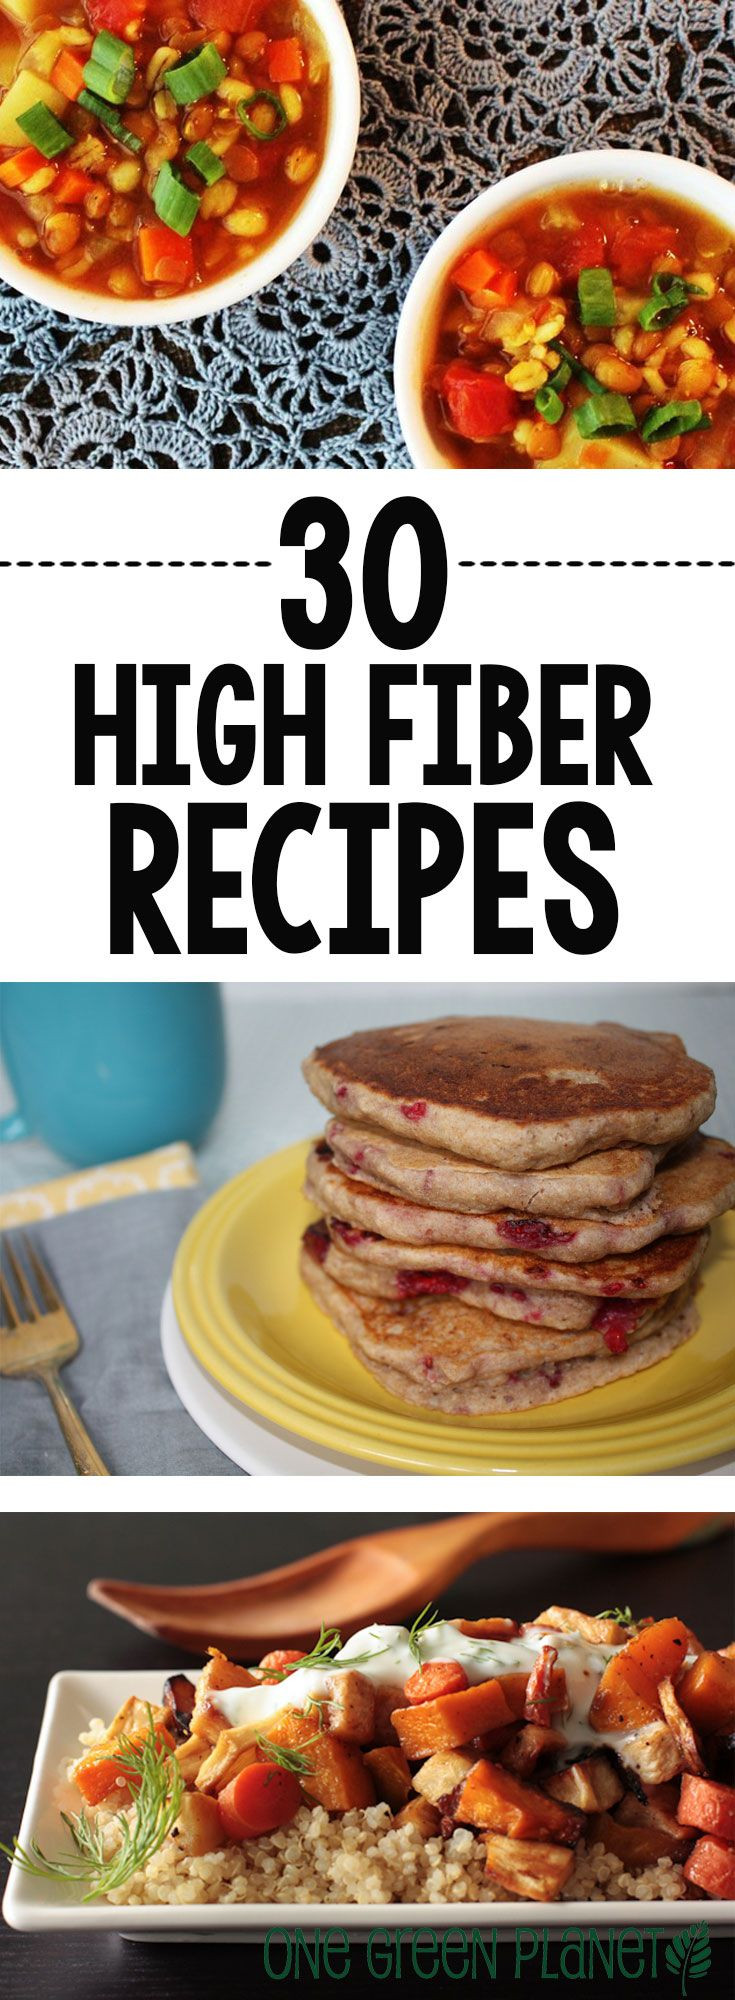 High Fiber Diets Recipes
 30 Vegan High Fiber Recipes to Keep Your System Moving